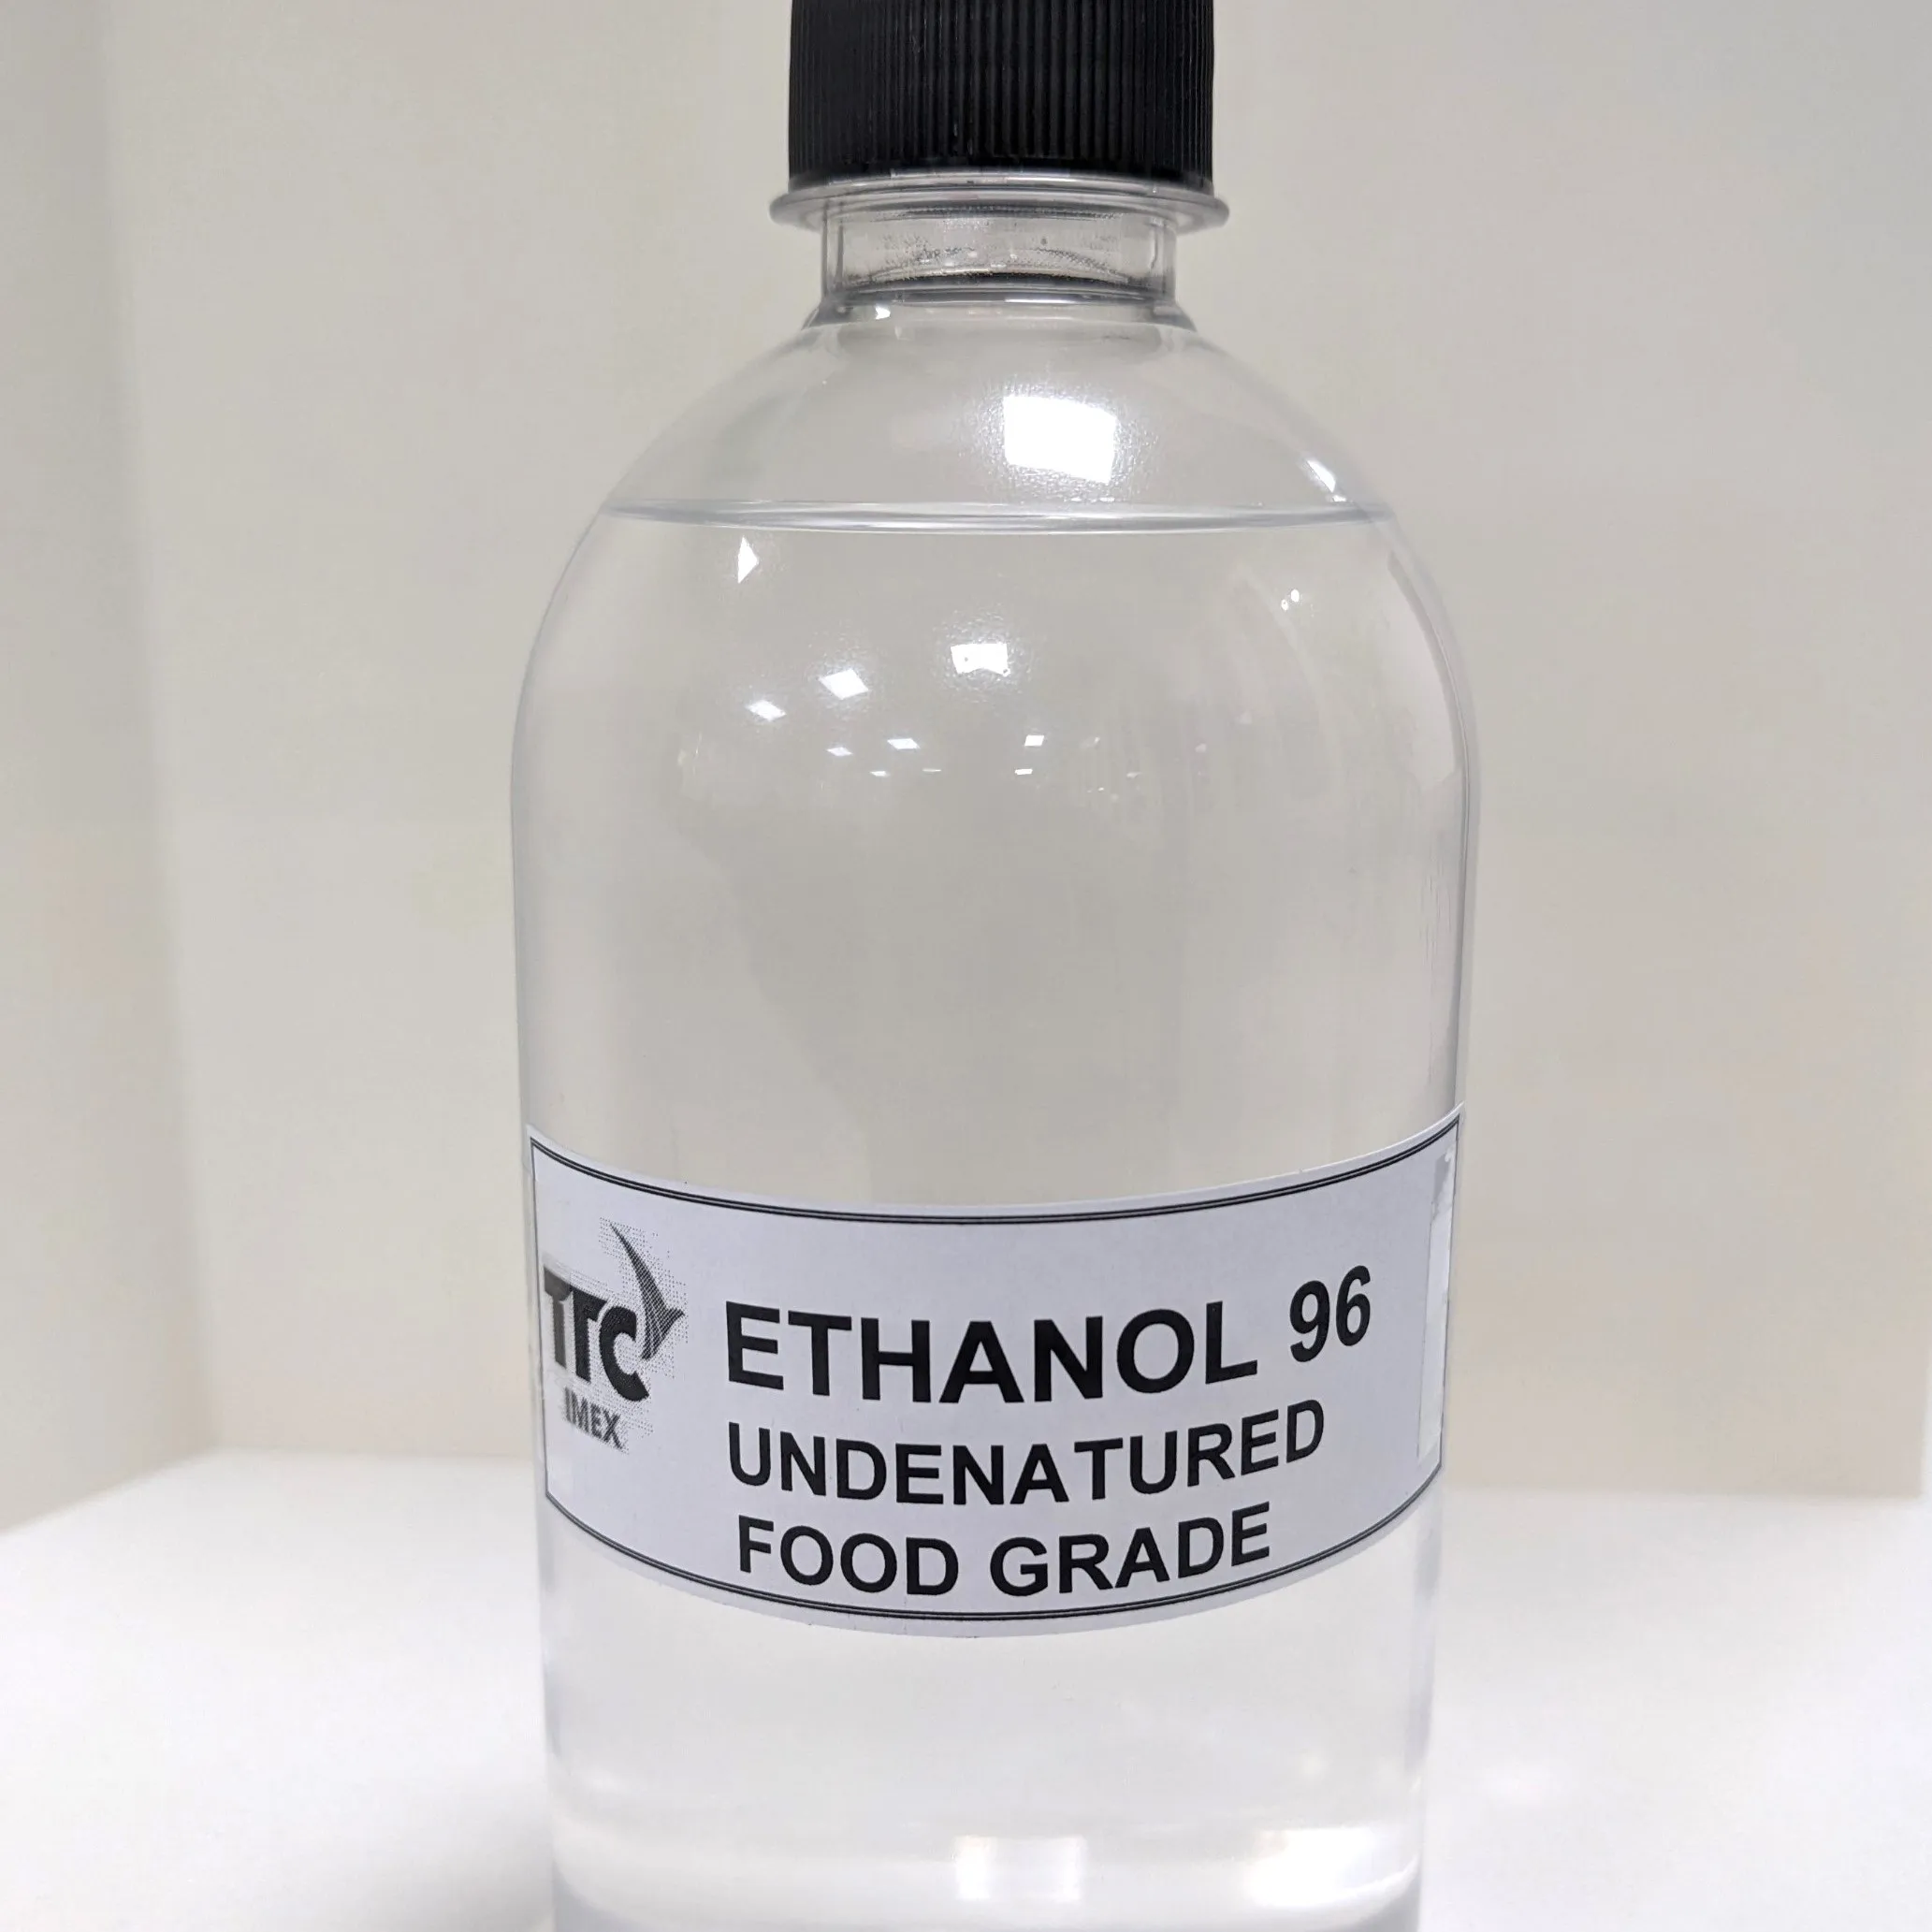 Top Quality Ethanol 96 Ena 96 Undenatured Food Grade In Isotank